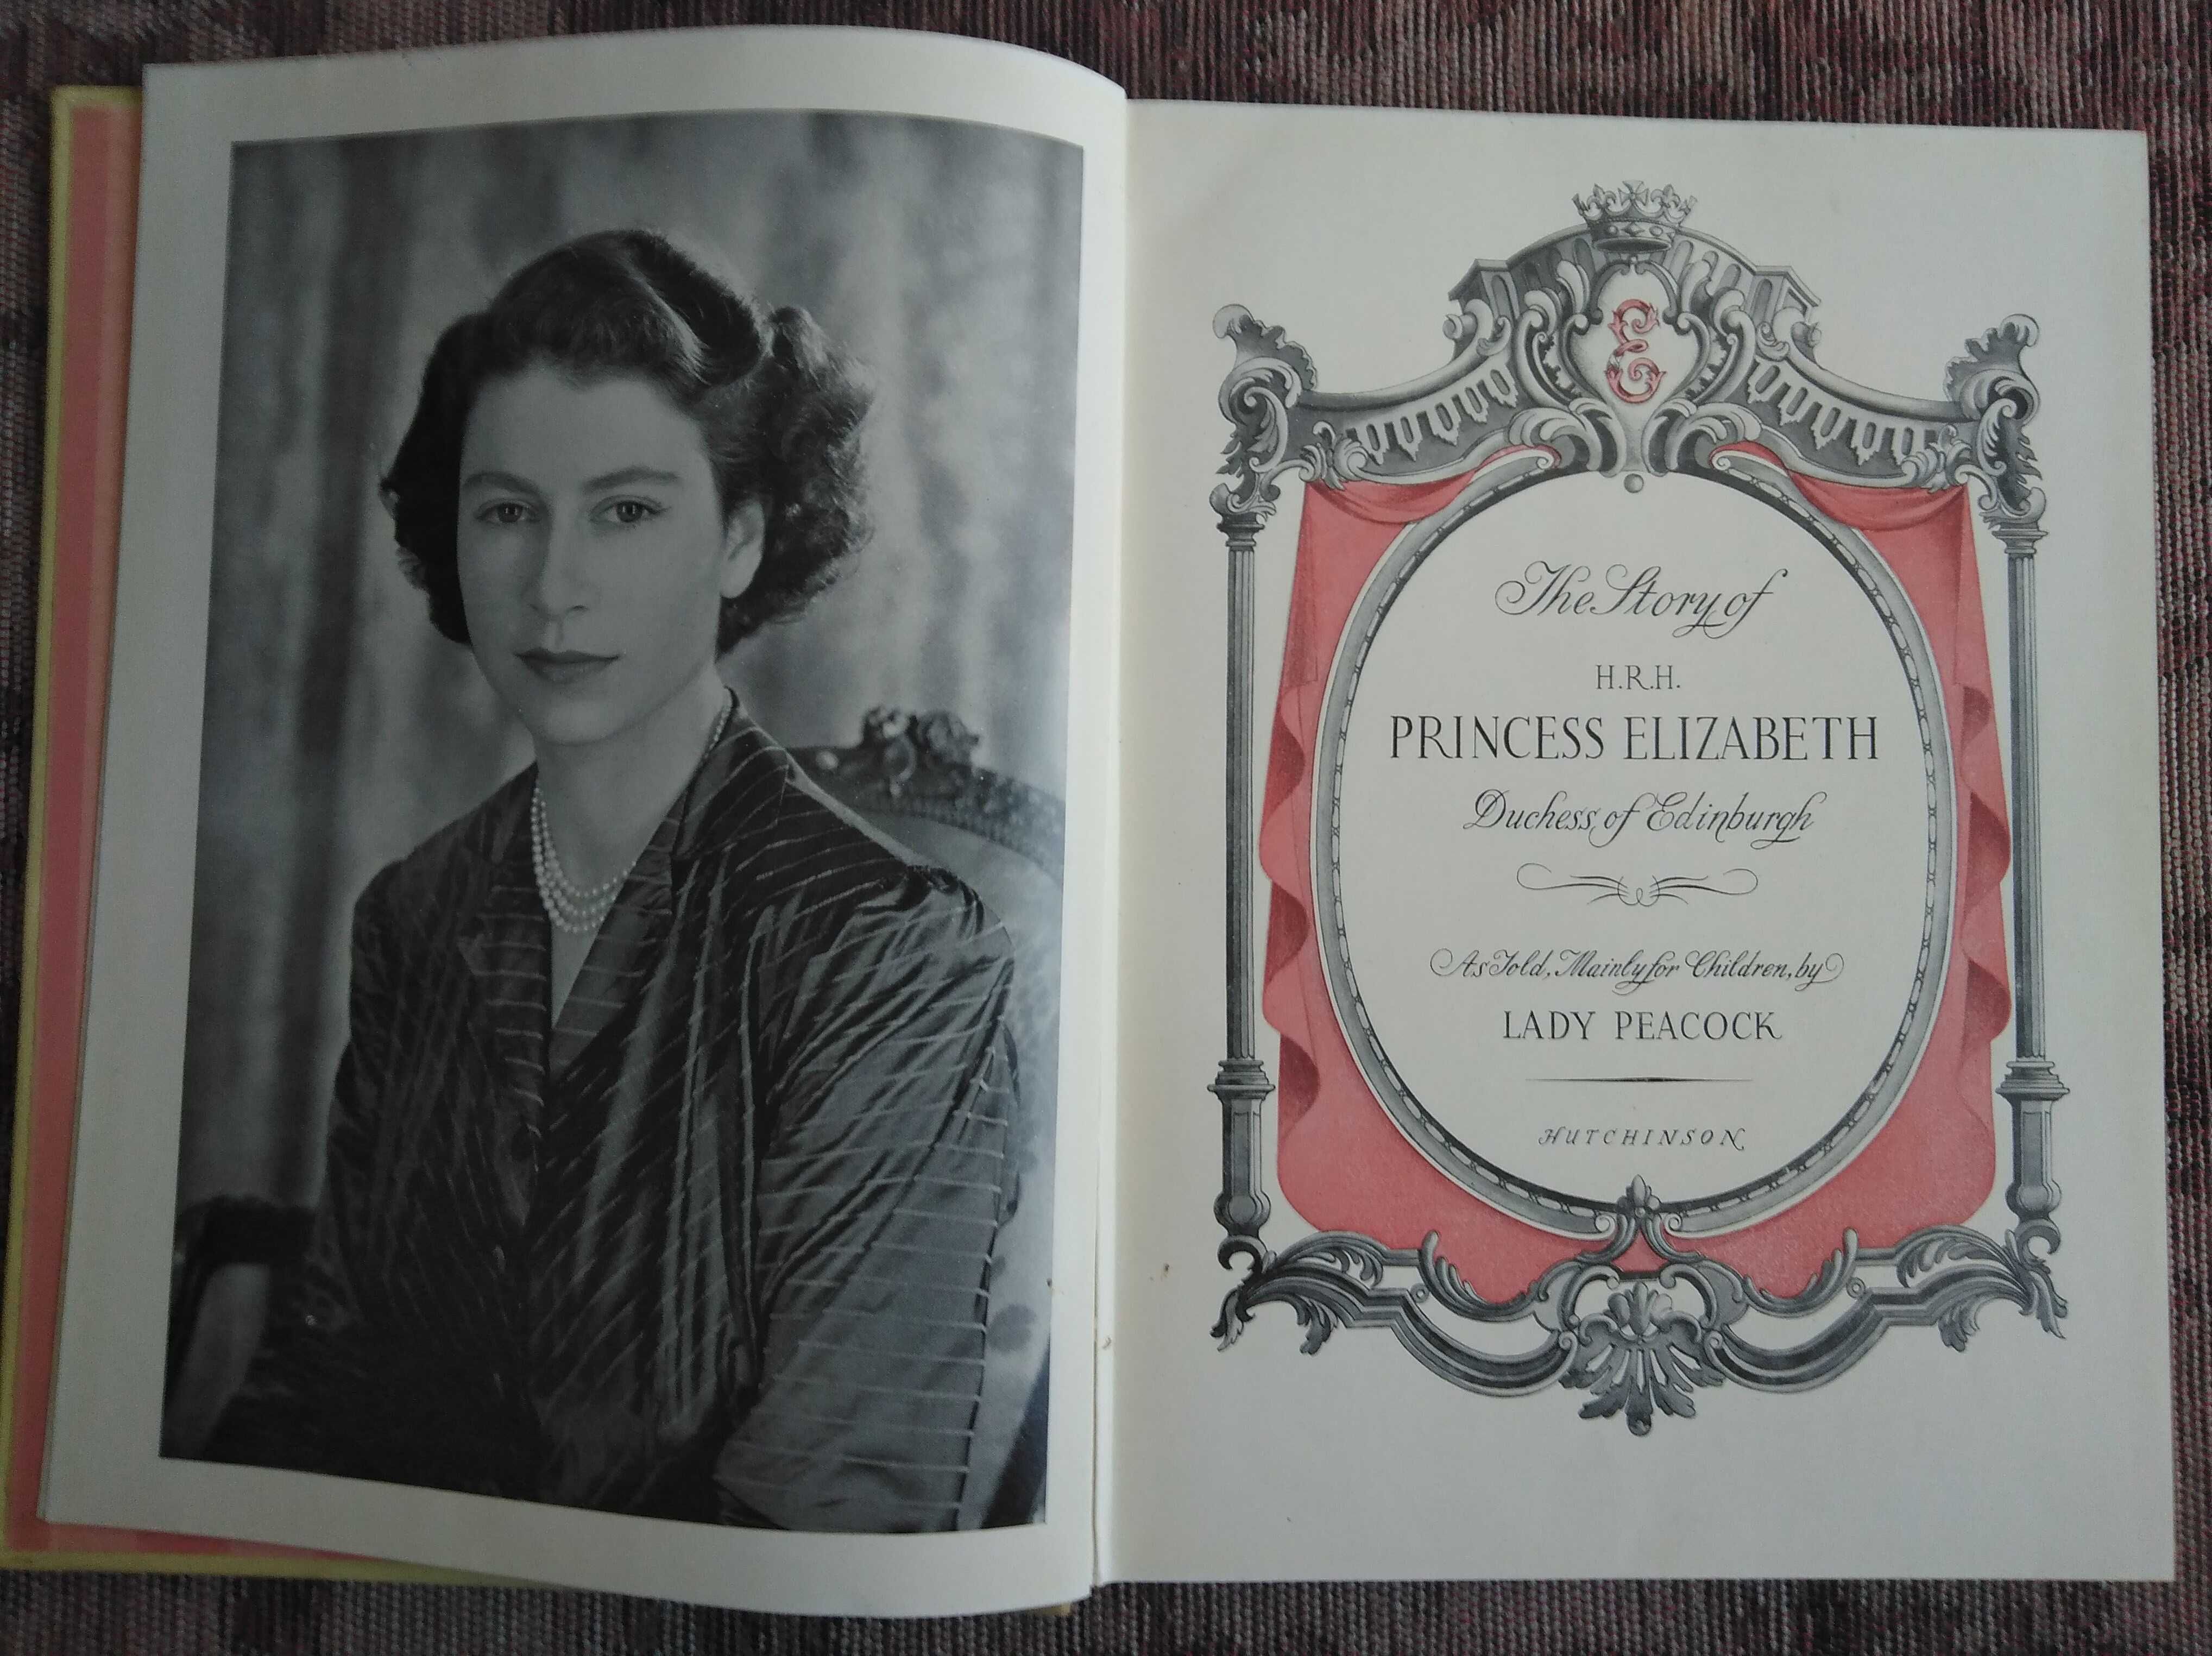 livro: The story of H.R.H. Princess Elisabeth, Duchess of Edimburgh...